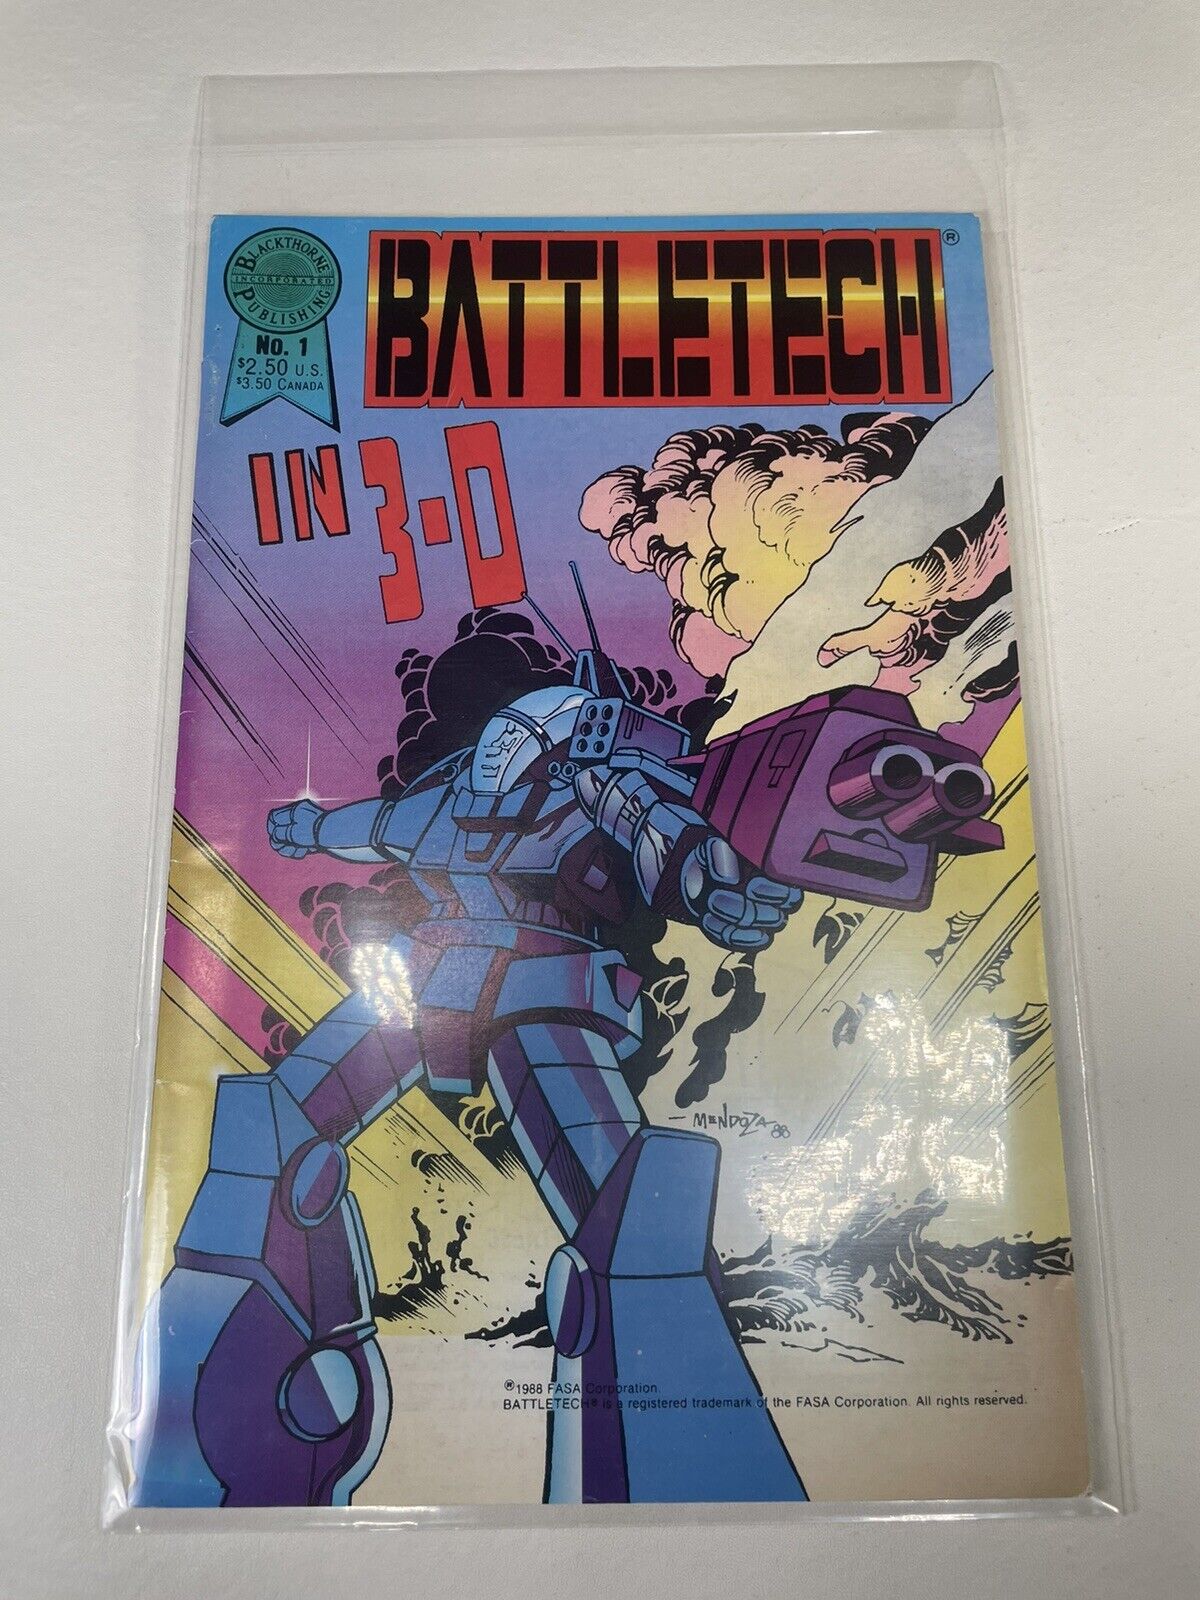 Battletech in 3-D #1 Blackthorne Publishing 